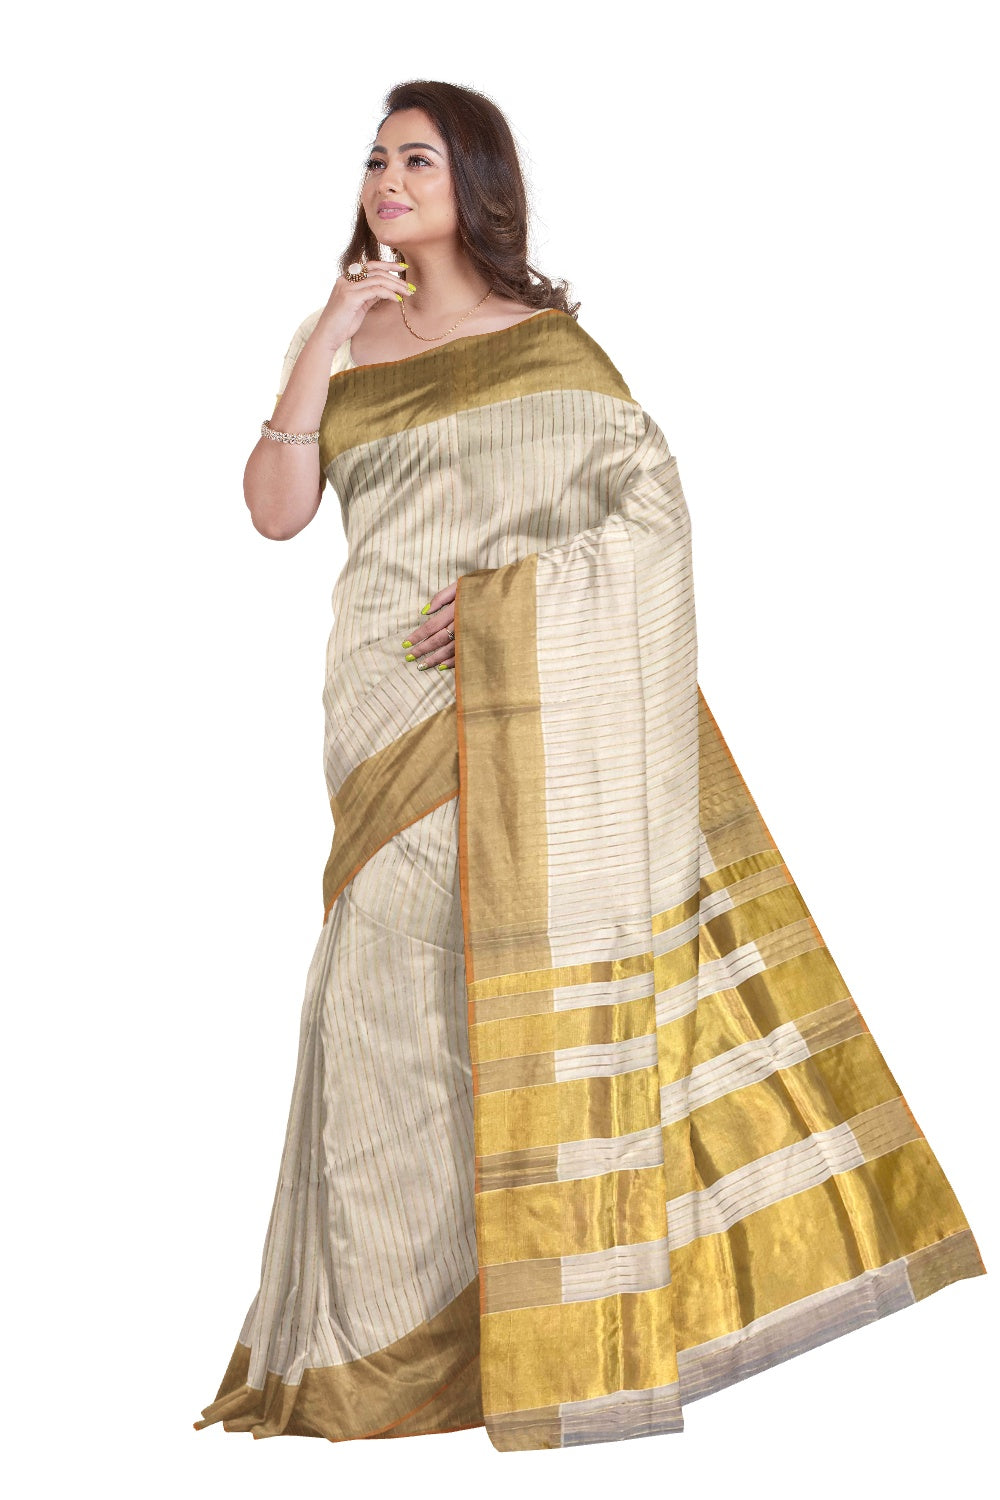 Southloom™ Handloom Kasavu Saree with Golden Kasavu Stripes on Body